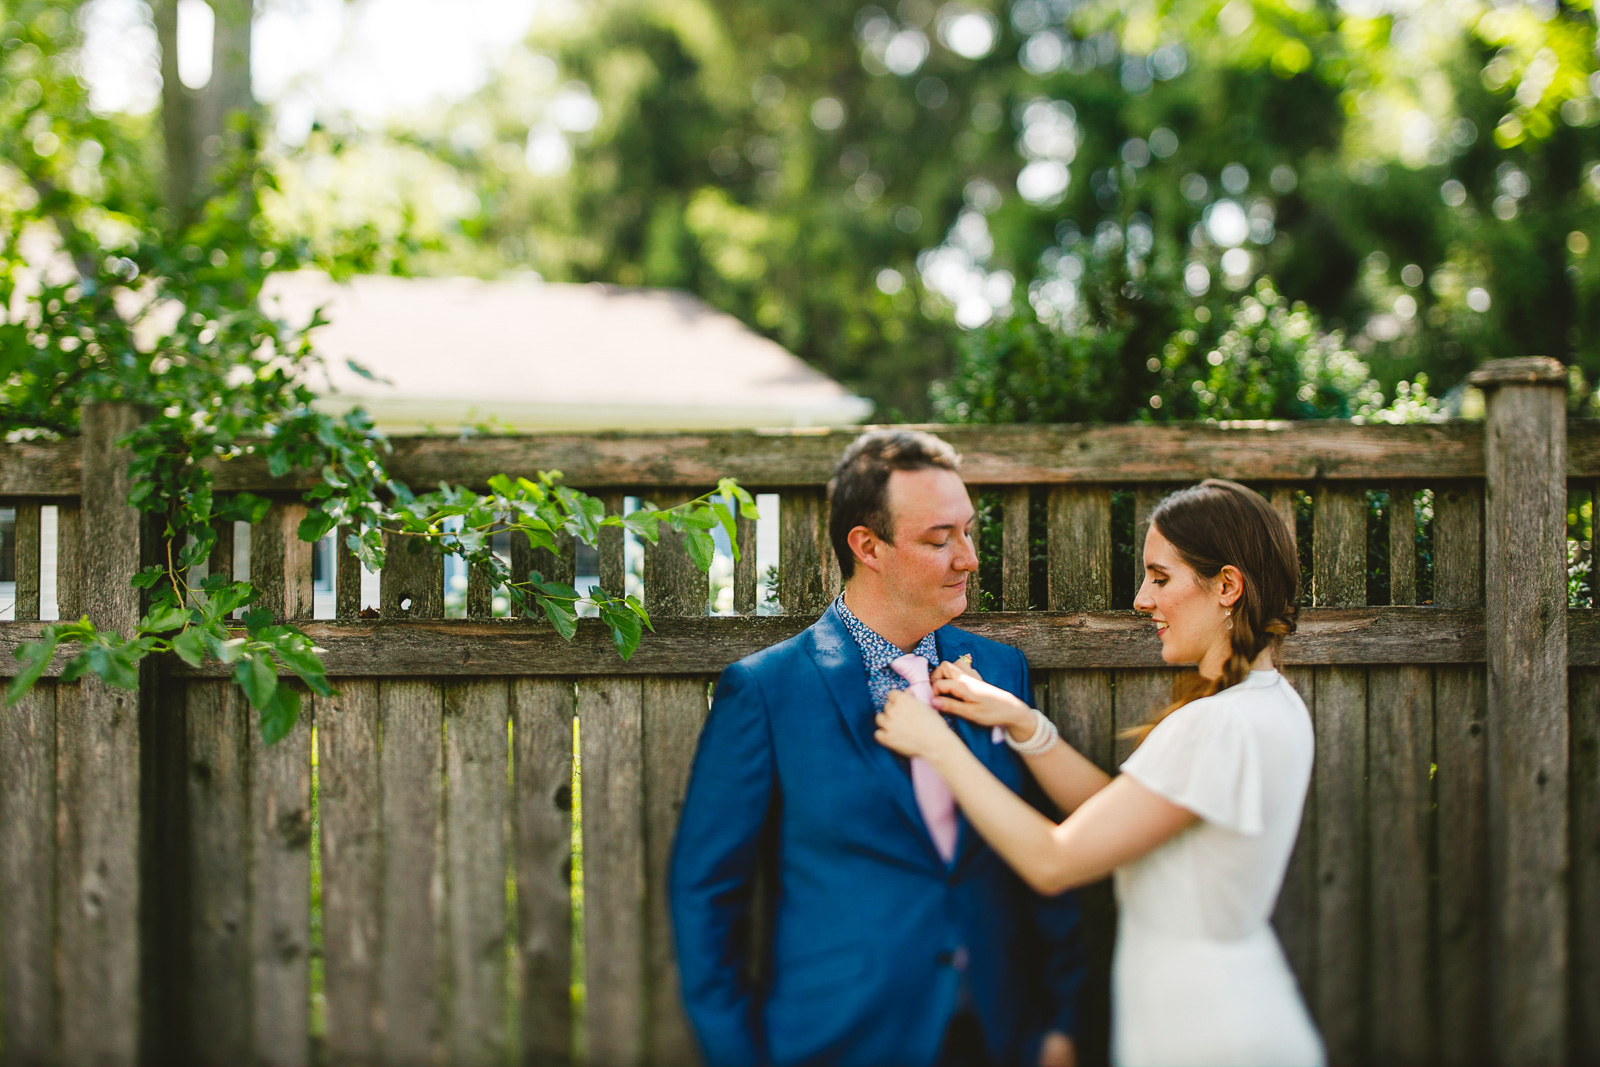 34 bride and groom portraits in back yard - Amazing Wedding in Backyard // Kristen + Jeff